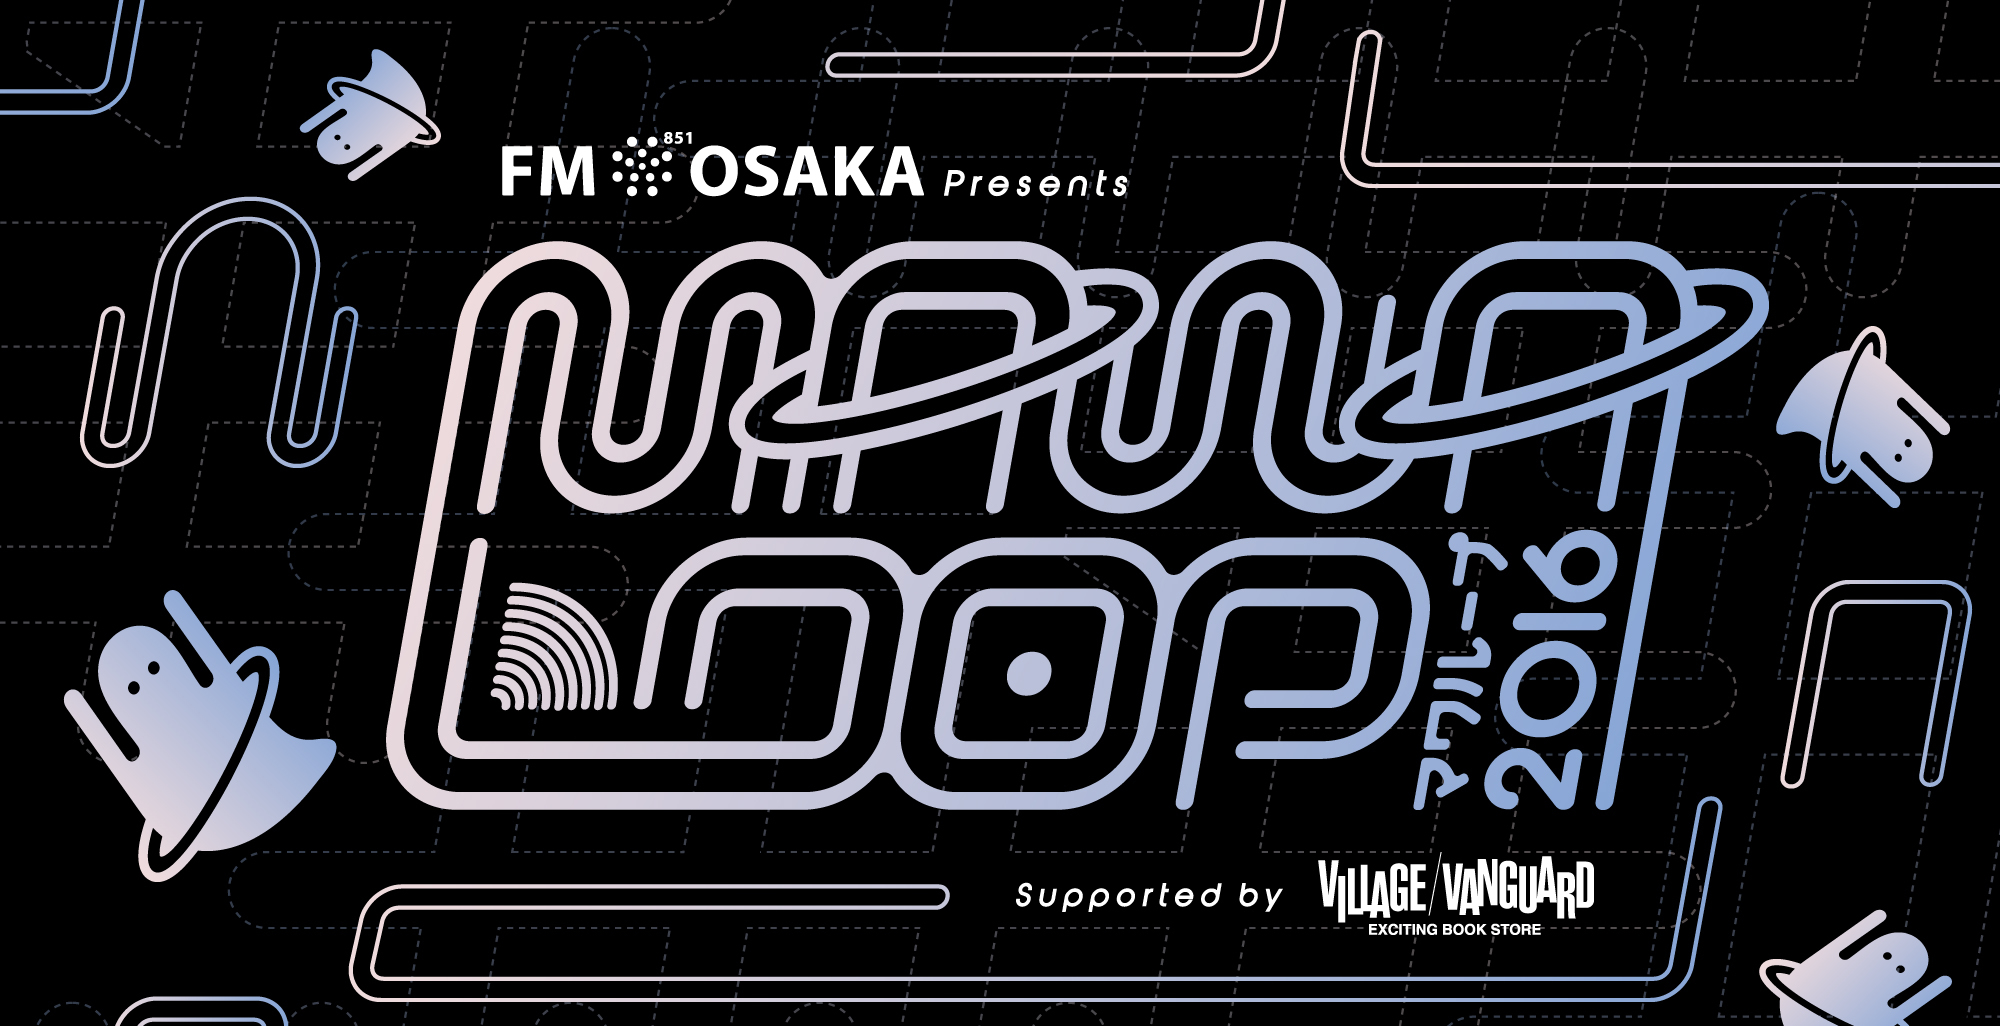 『FM OSAKA presents MAWA LOOP2016 supported by Village Vanguard』